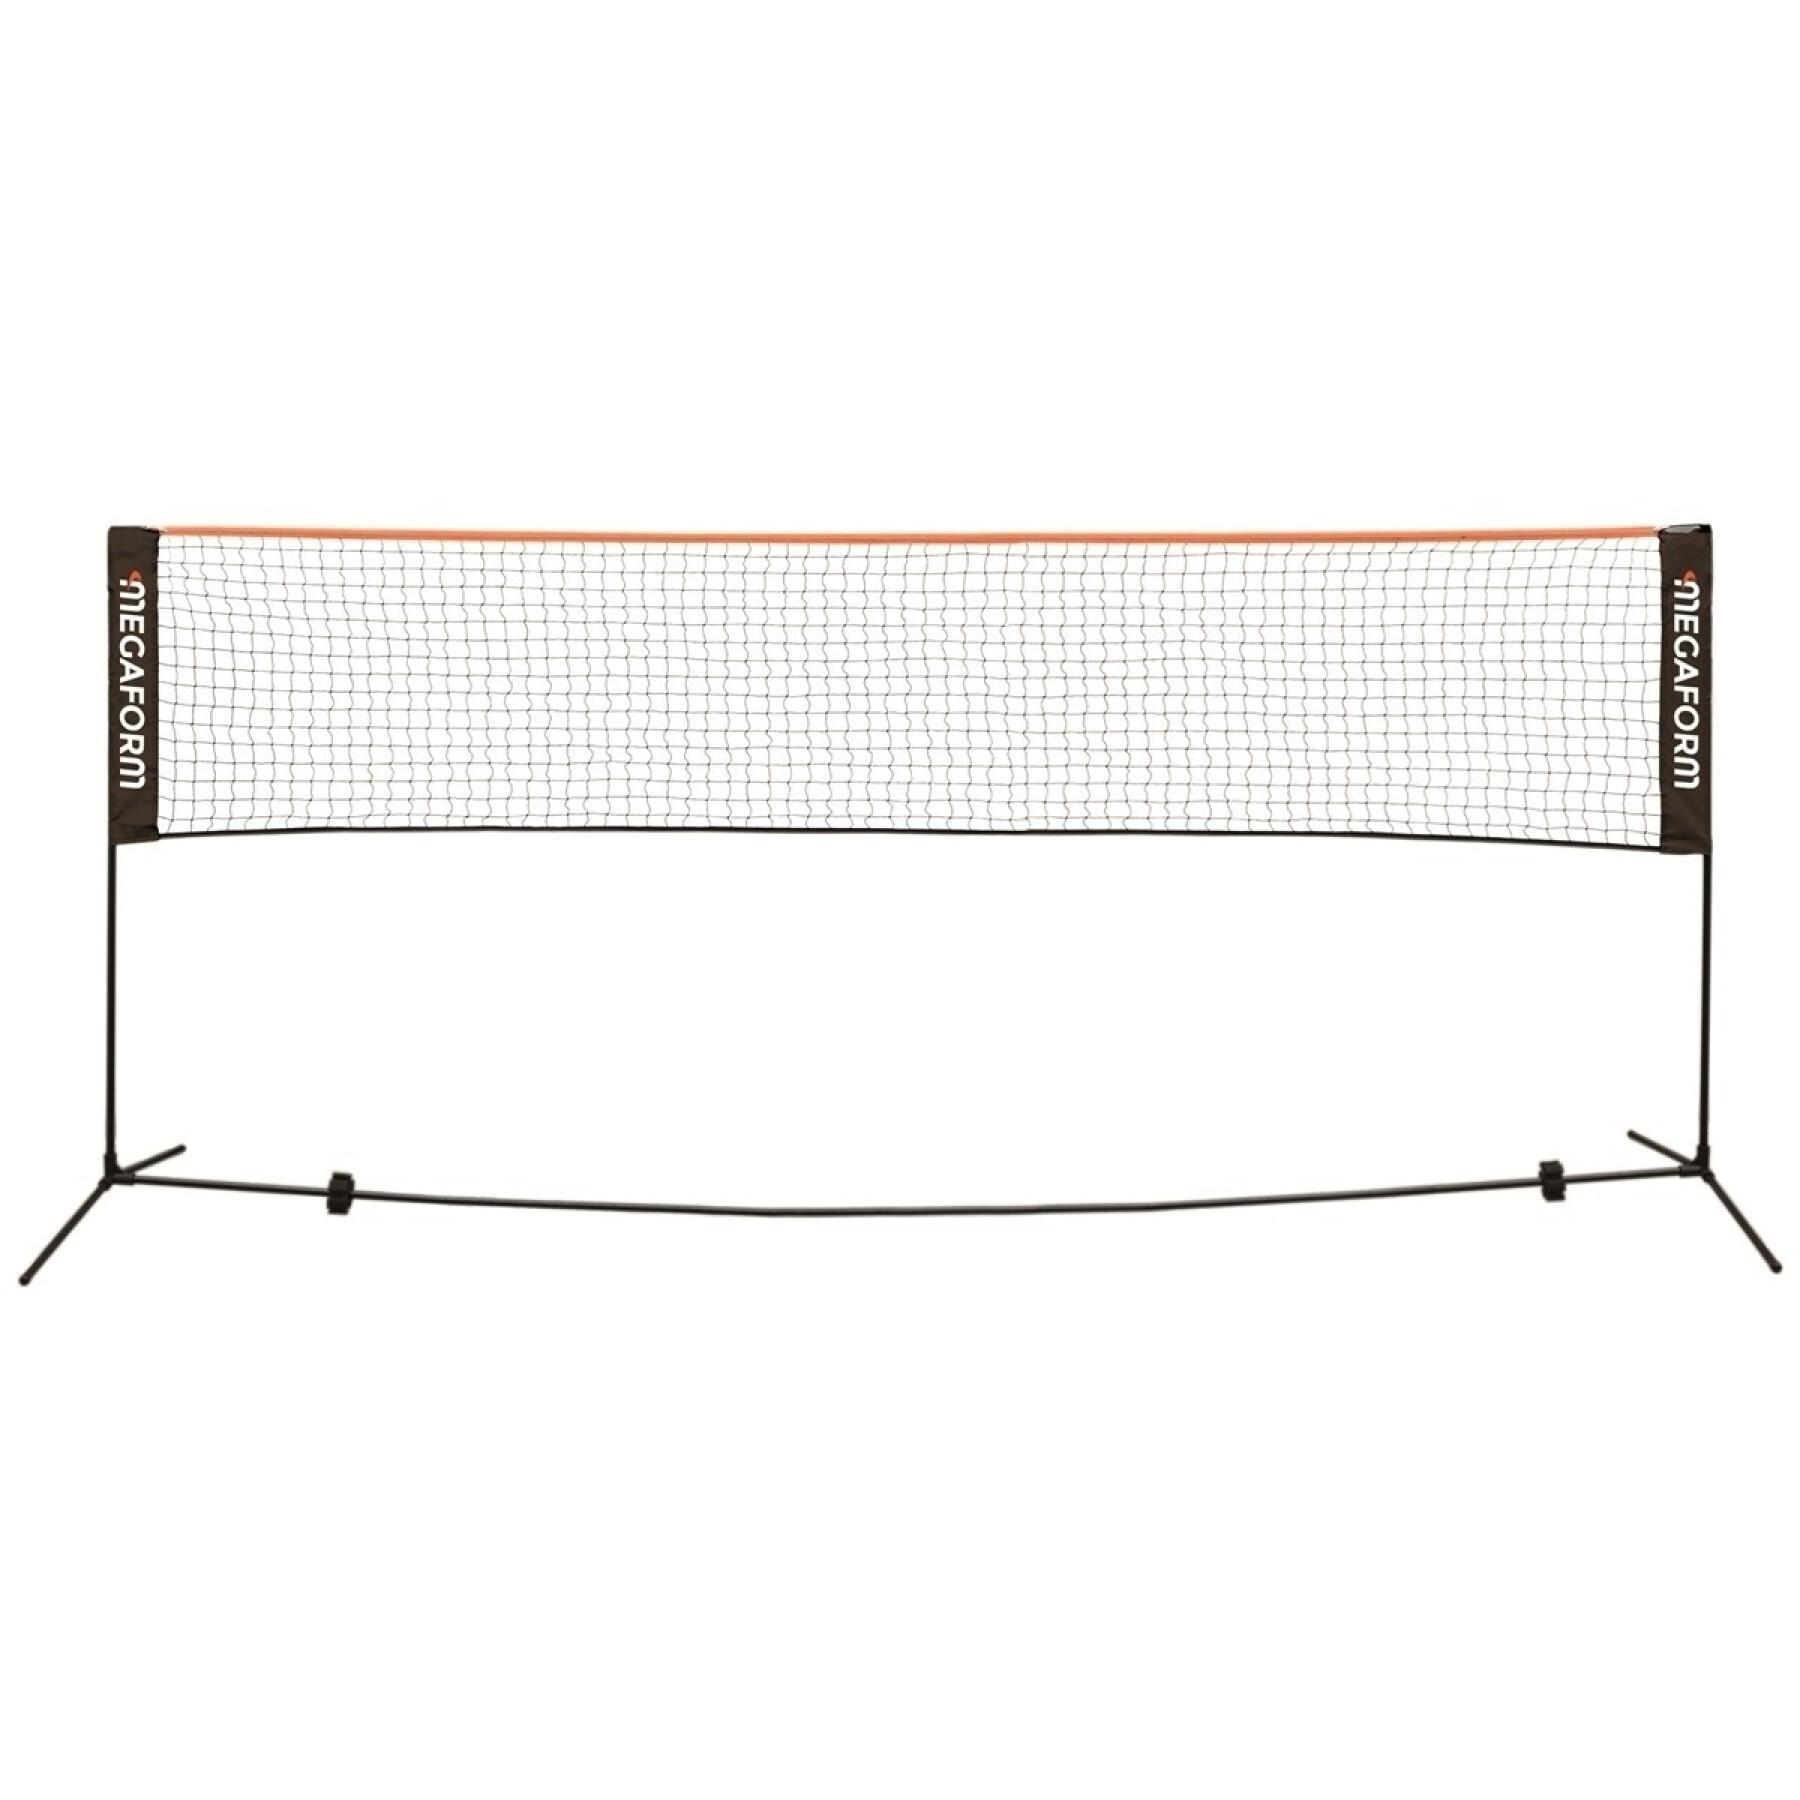 Portable badminton and mini tennis net Megaform